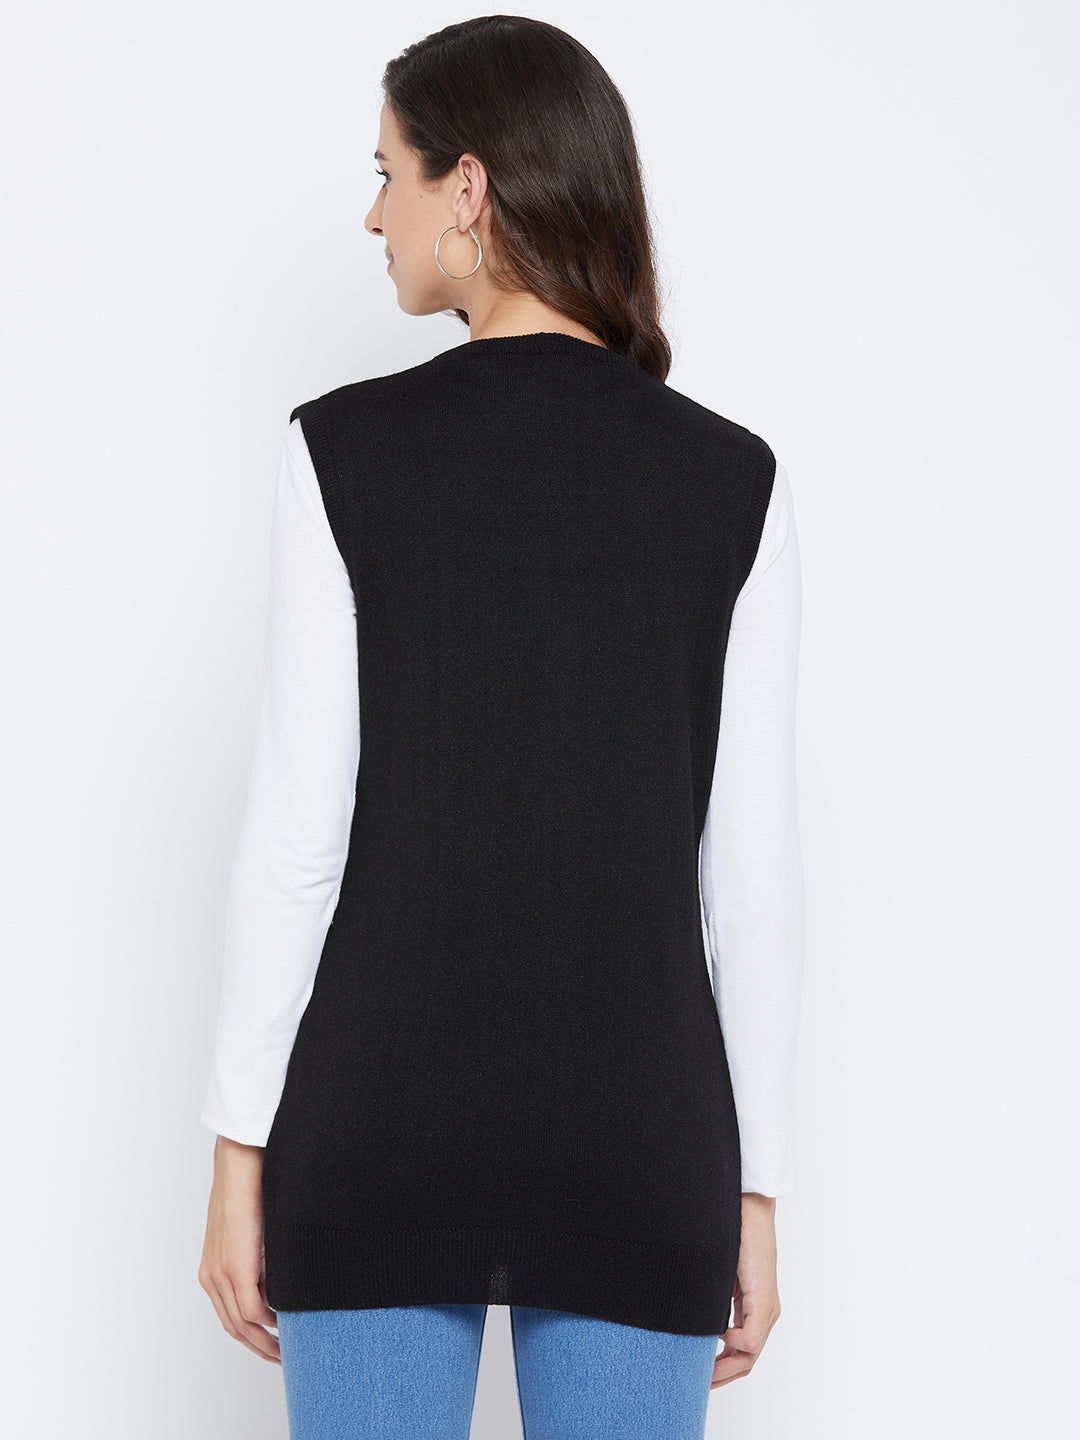 Livfree Women's V-neck Sleeveless Solid Cardigan - Black